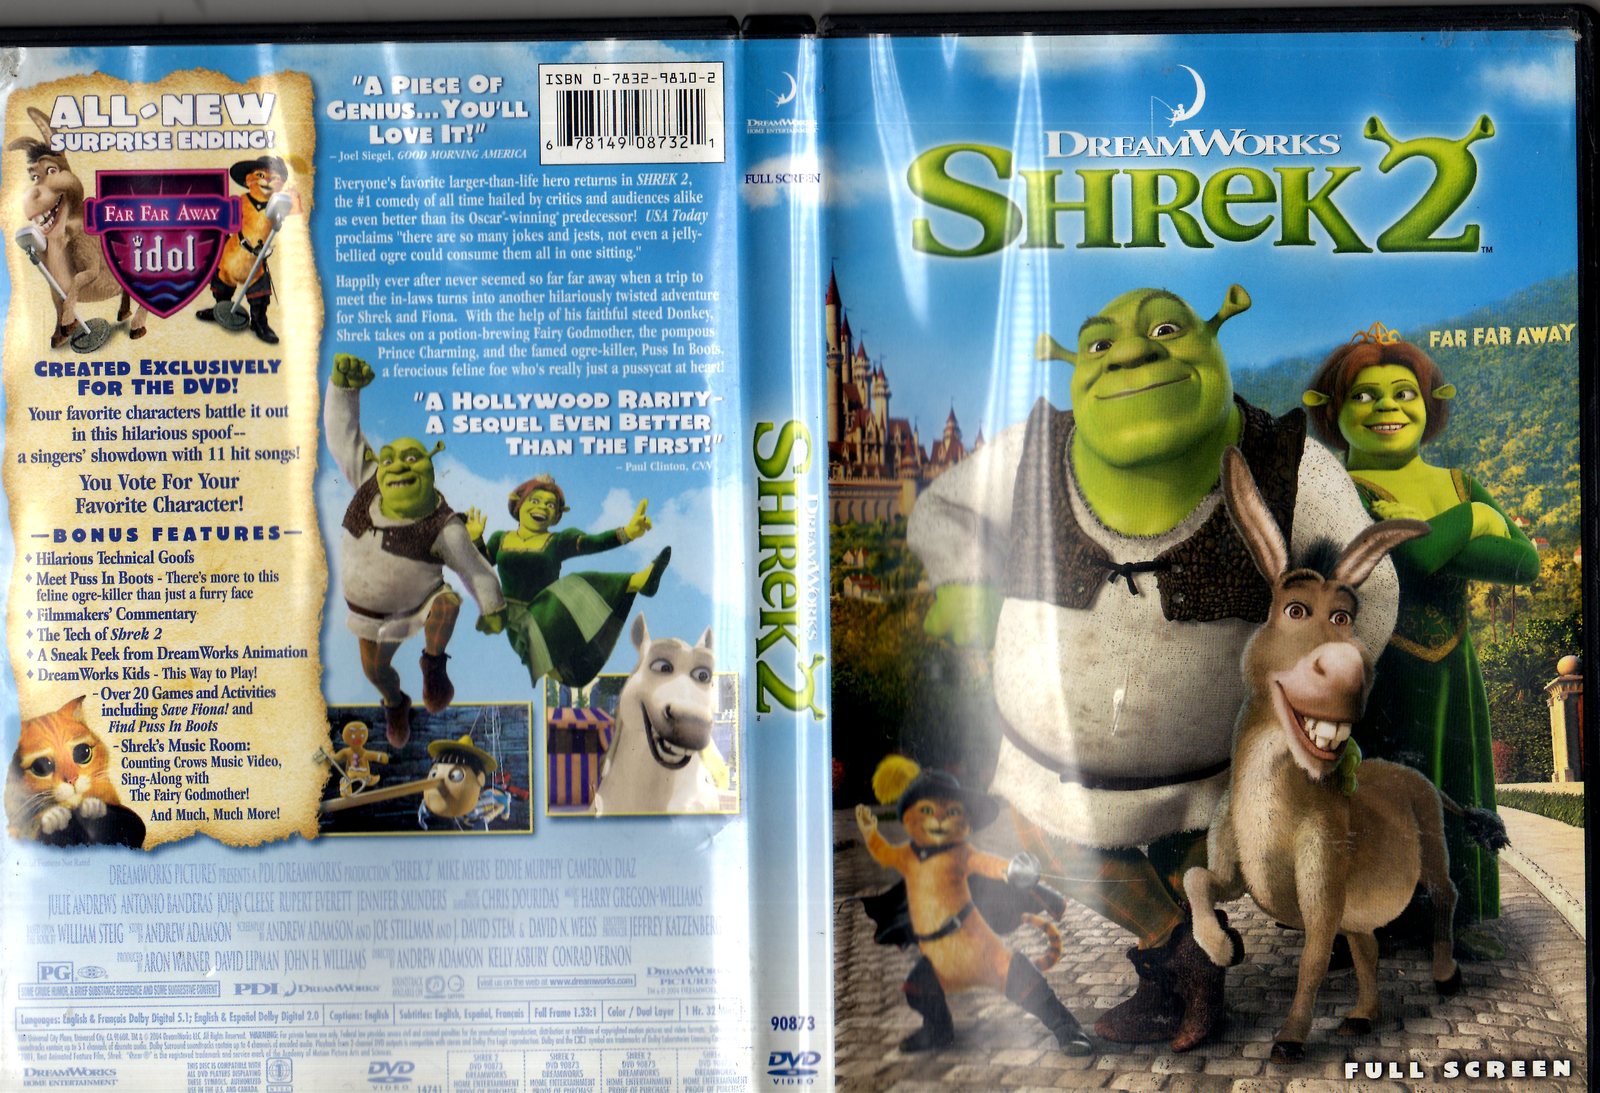 Shrek 2 -DVD case and artwork - Storage & Media Accessories